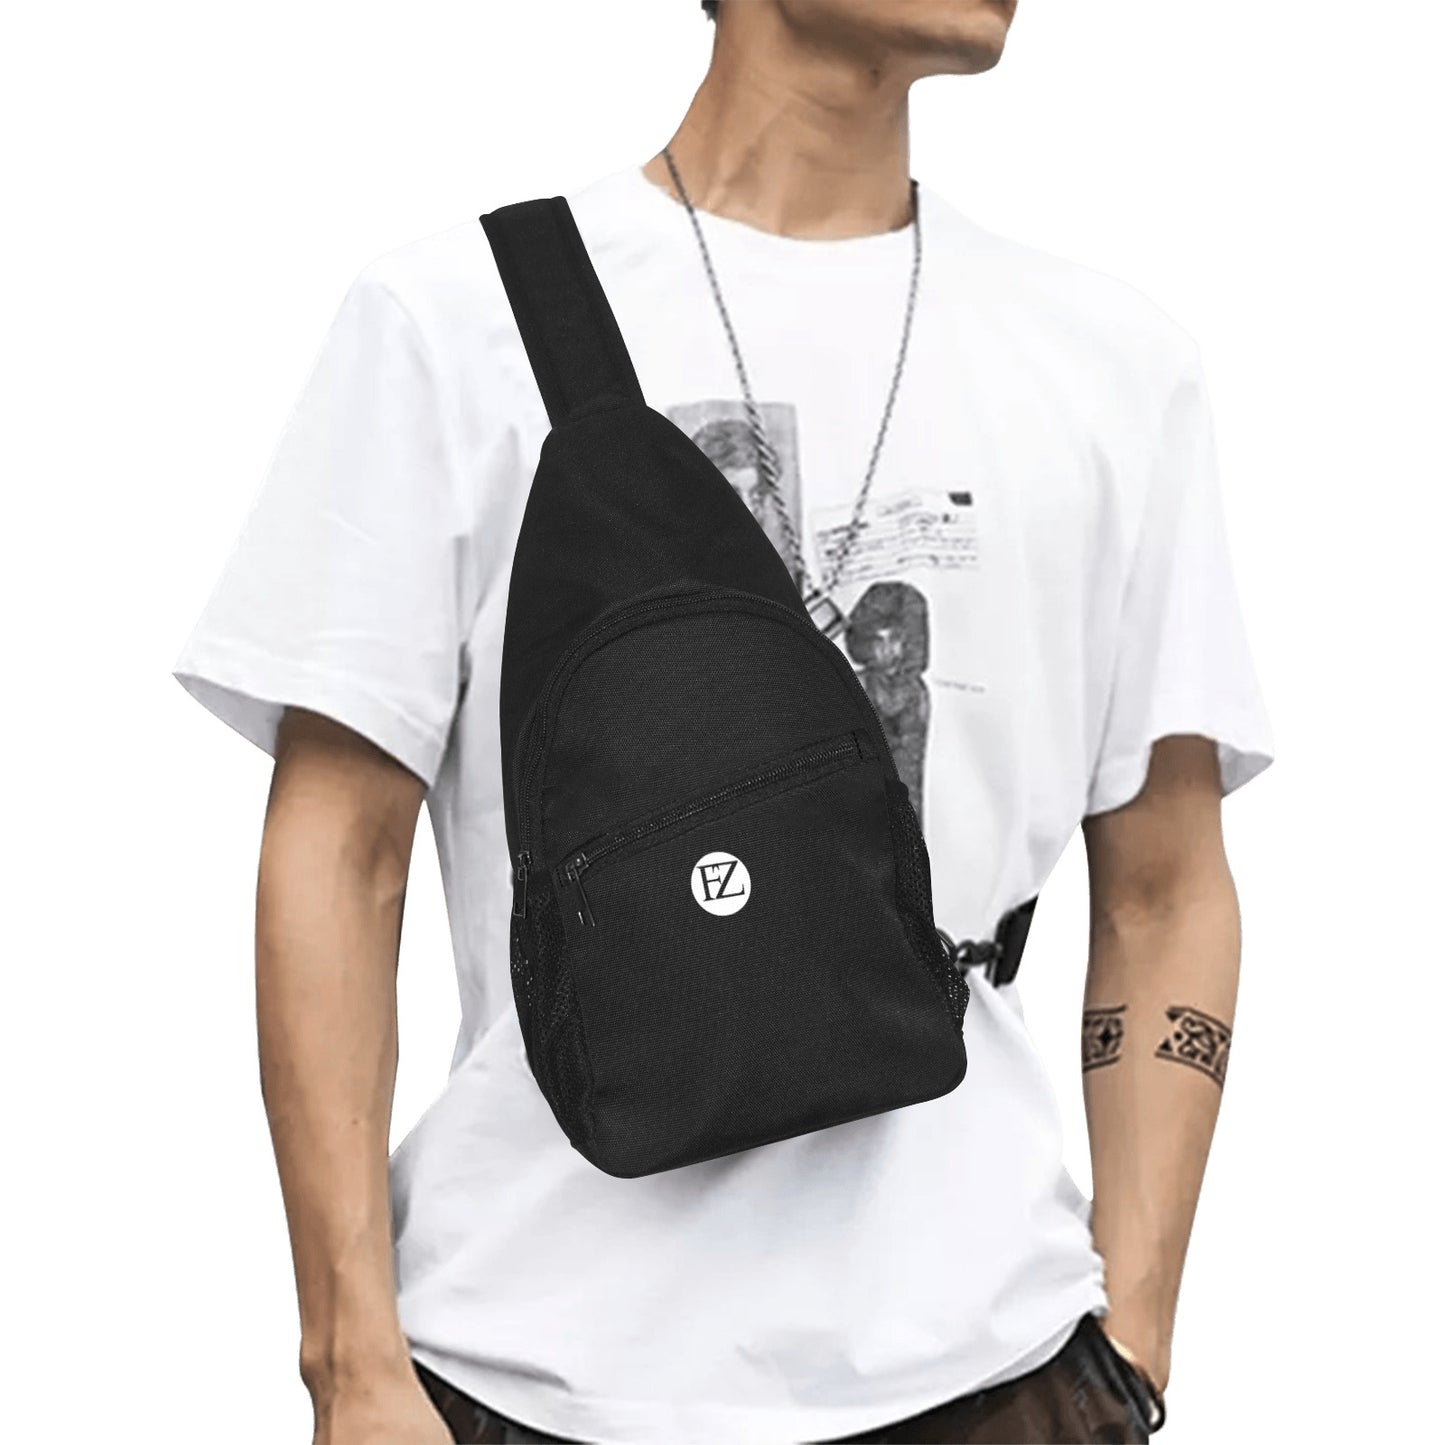 fz men's chest bag too one size / fz chest bag-black all over print chest bag(model1719)